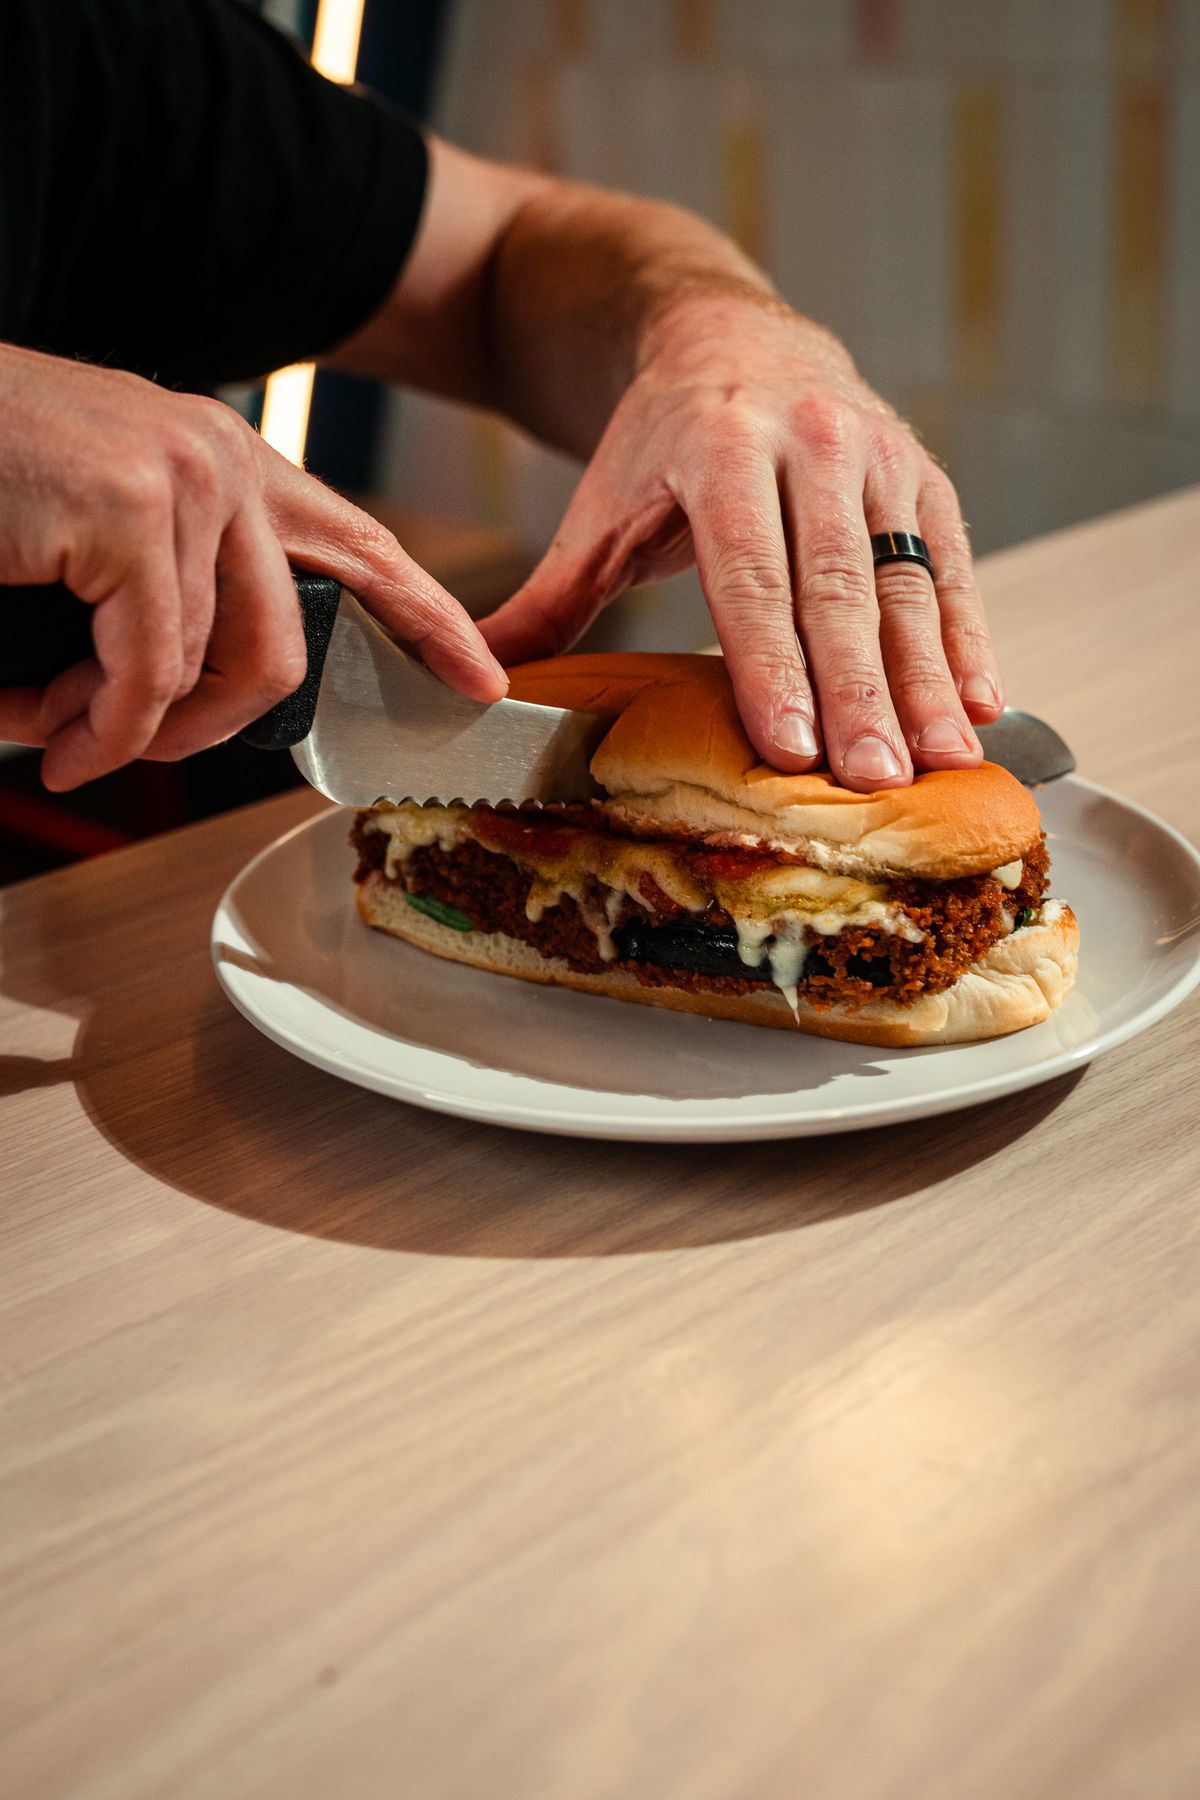 A sandwich being cut